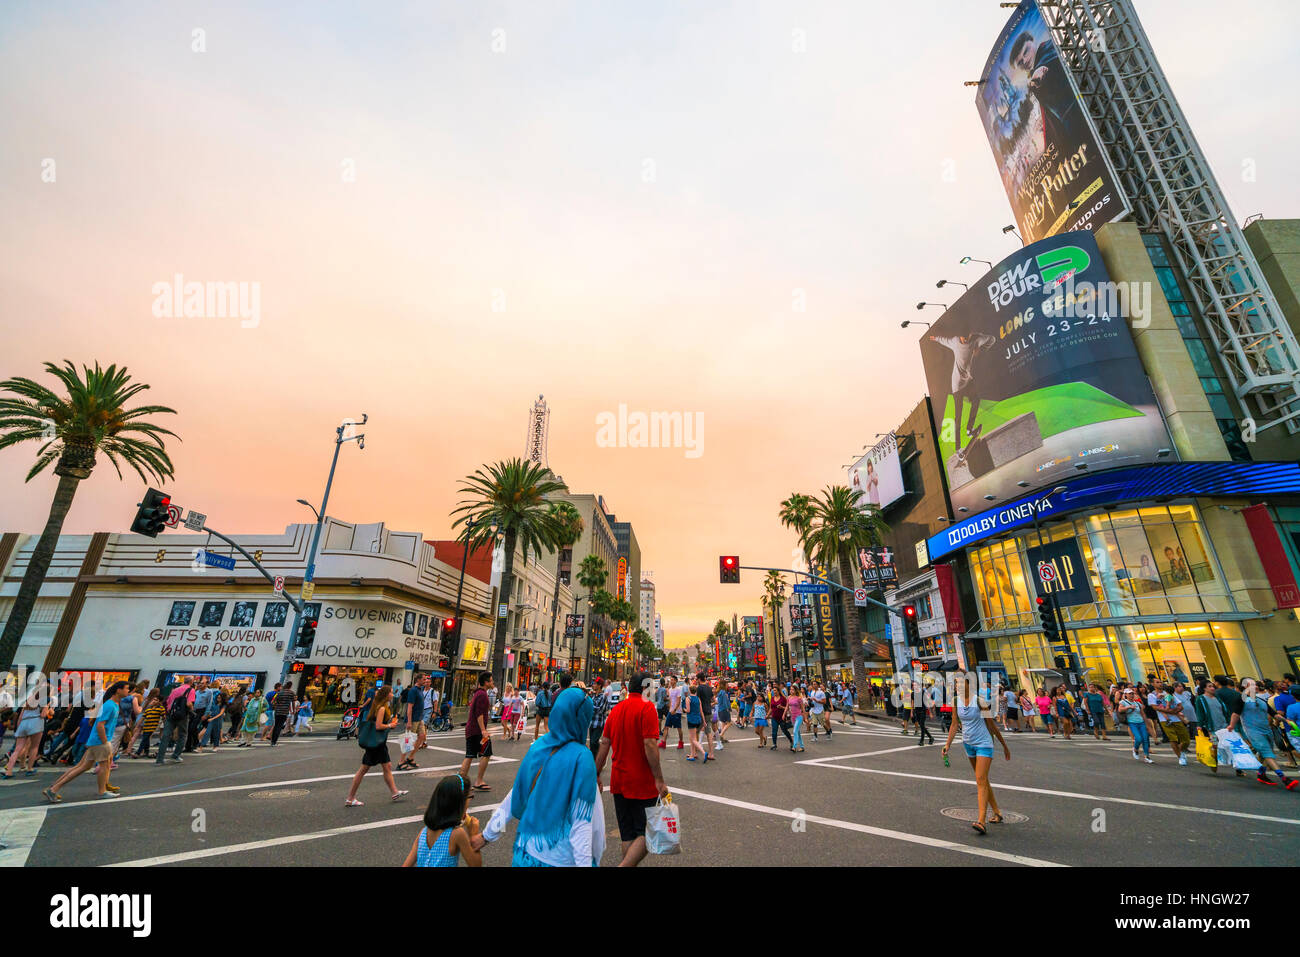 Los Angeles,California,usa. 2016/07/23:Hollywood boulevard,blvd, road at sunset,Los Angeles,California,usa. Stock Photo